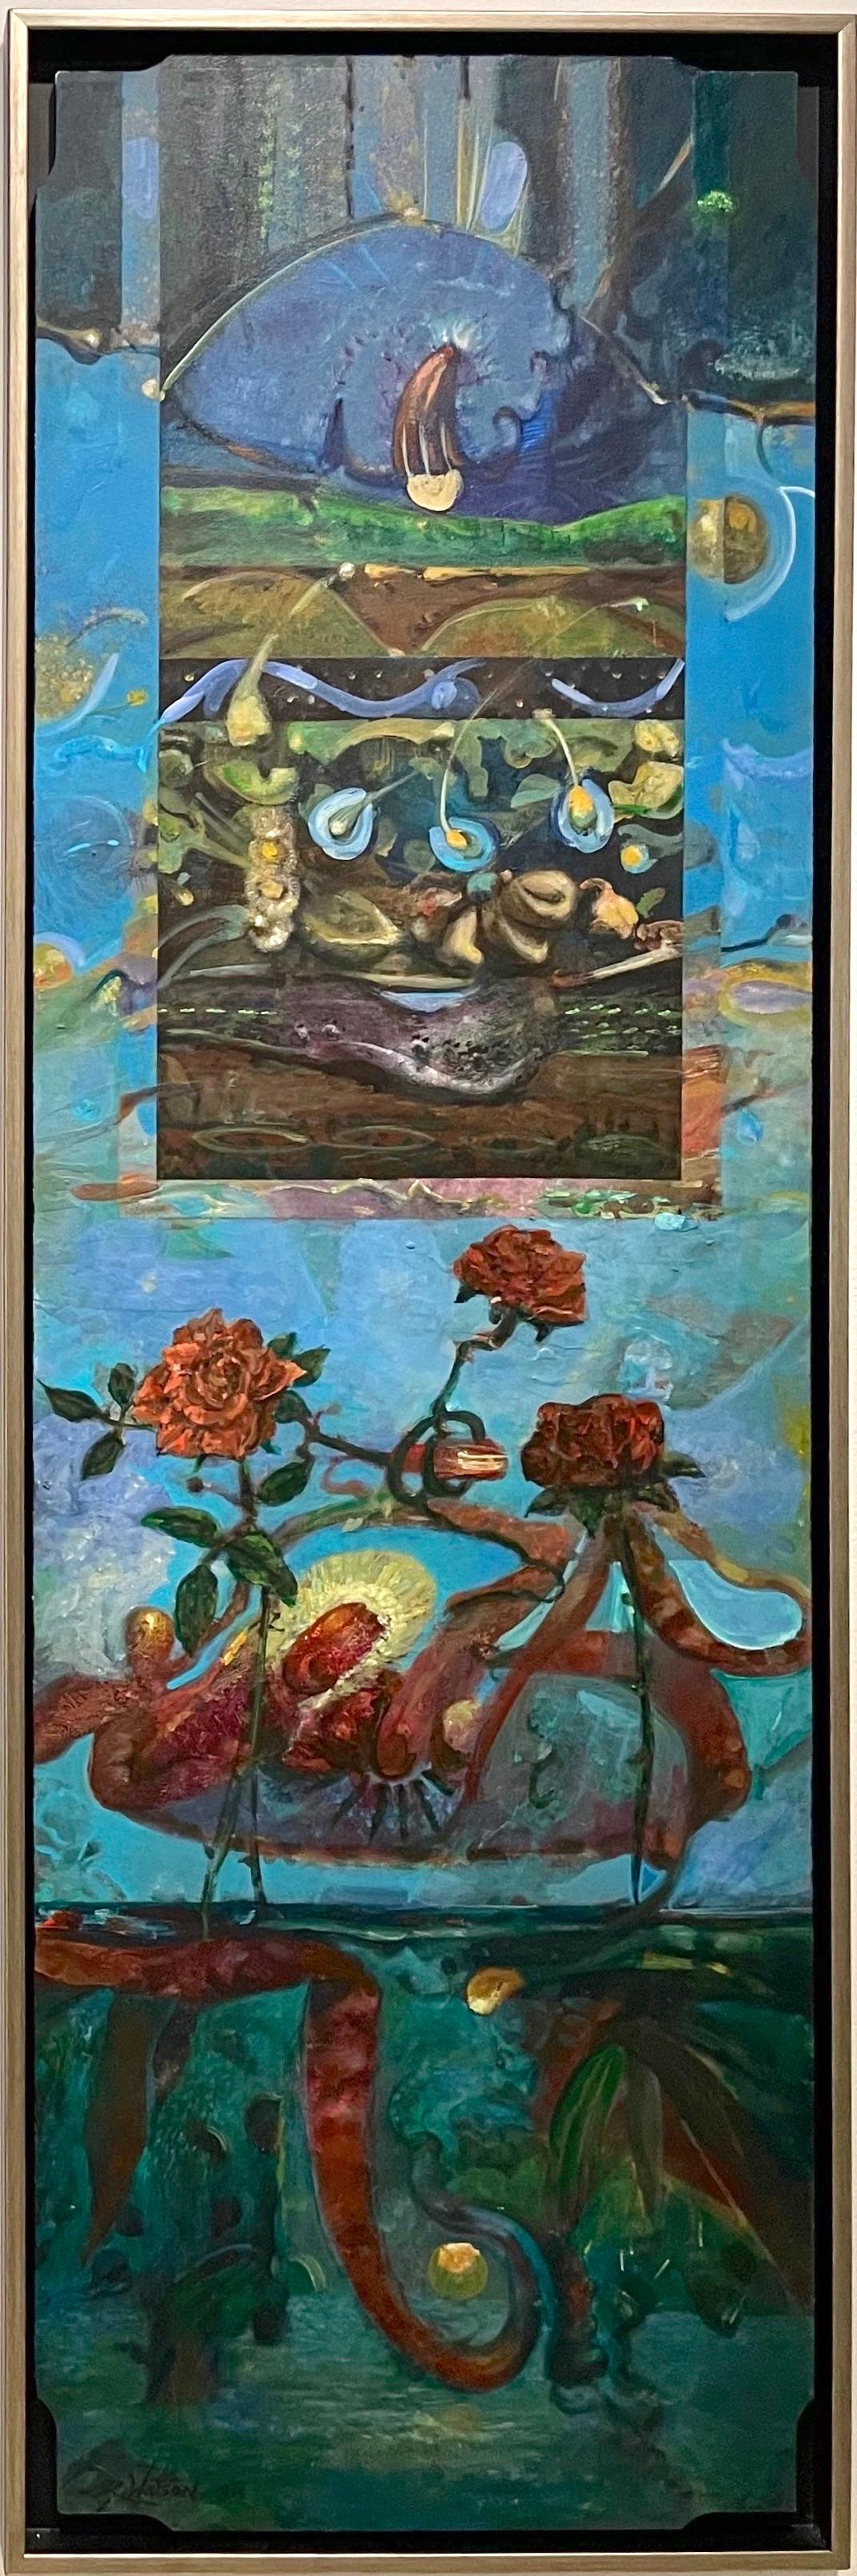 Richard J. Watson Landscape Painting - Free Association II: abstract imagined landscape painting w/ flowers. blue ocean